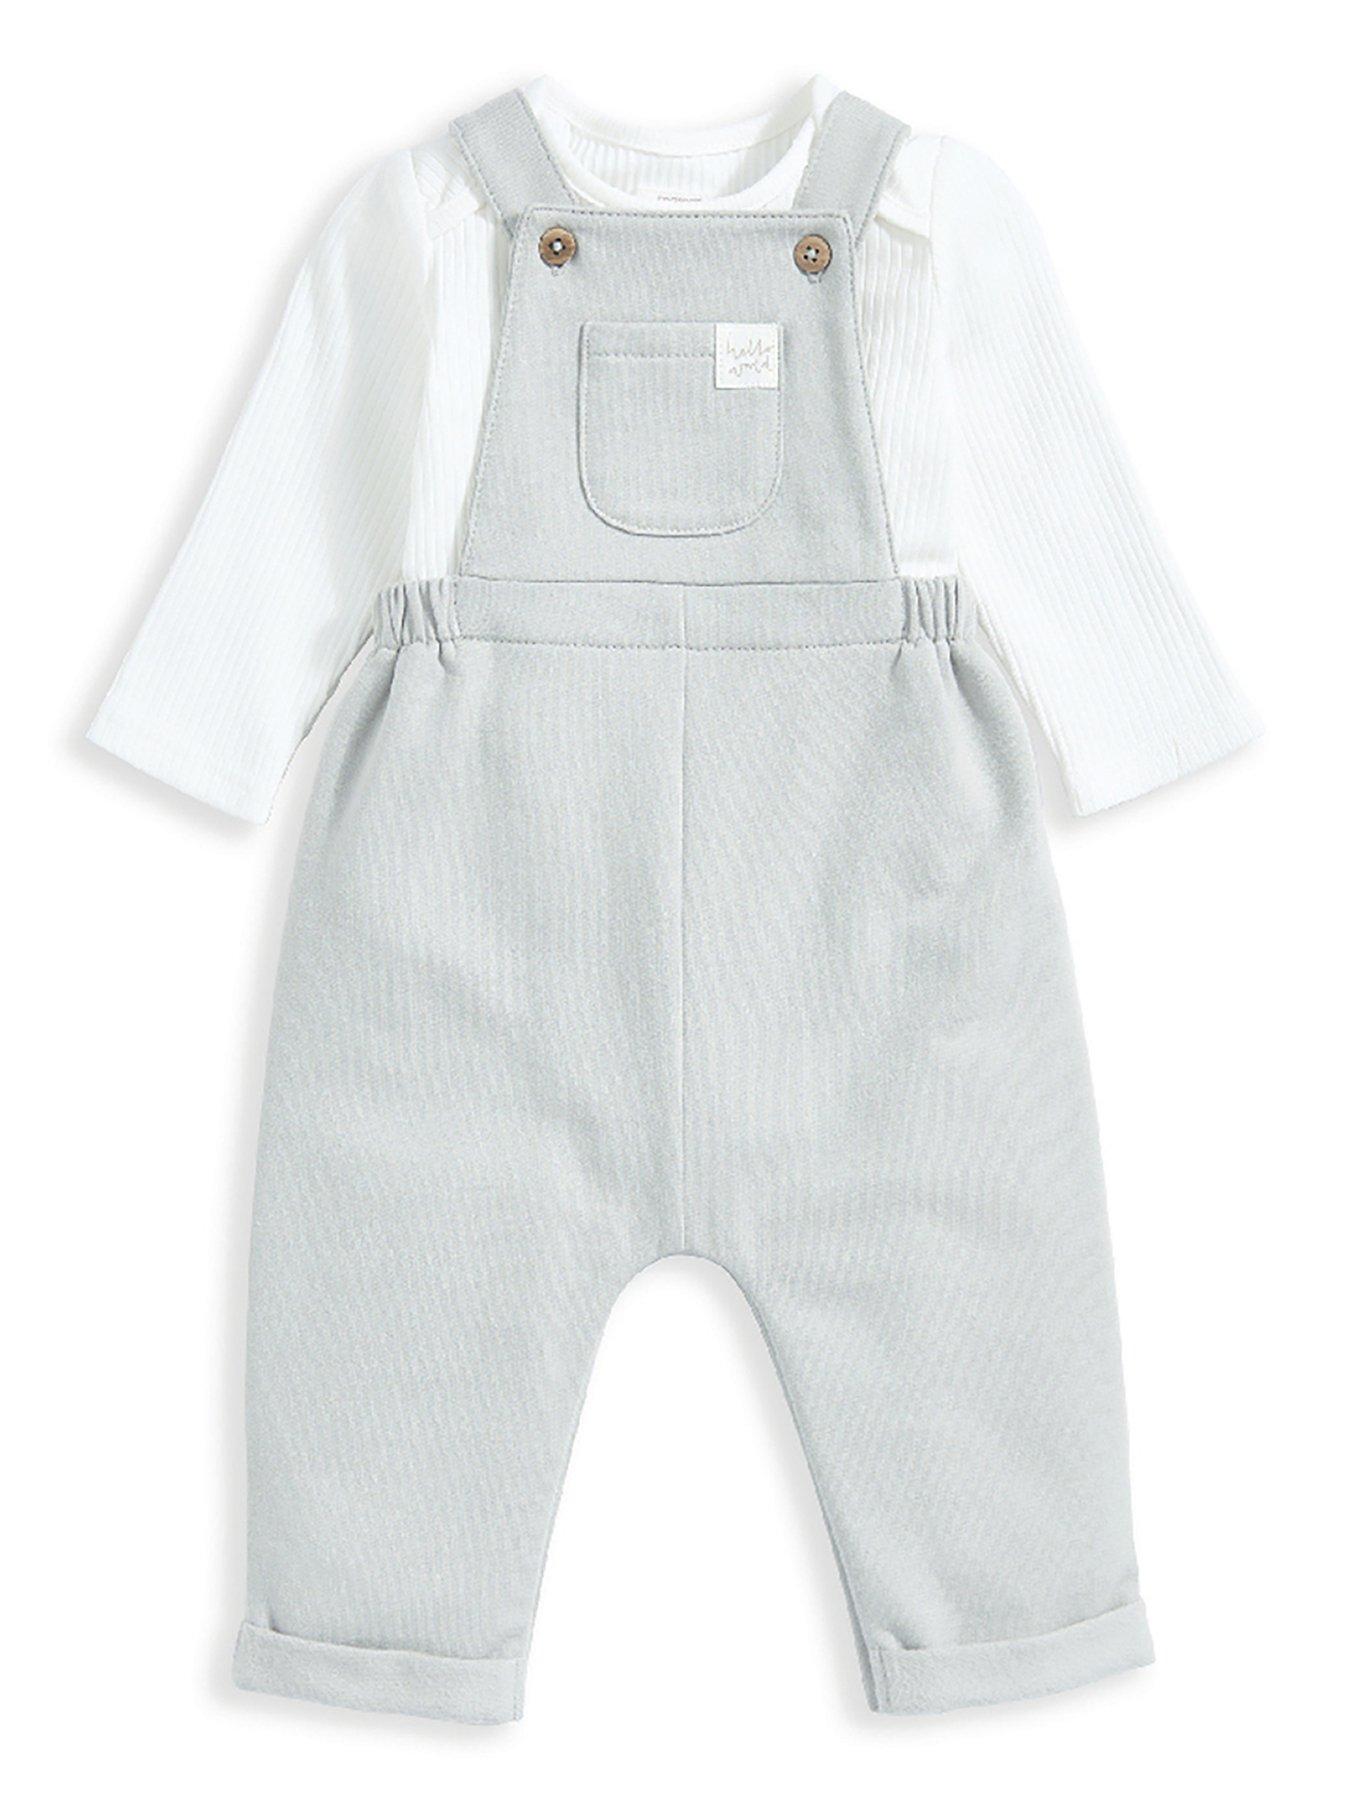 Baby Outfit Sets  Baby Clothing – Mamas & Papas UK